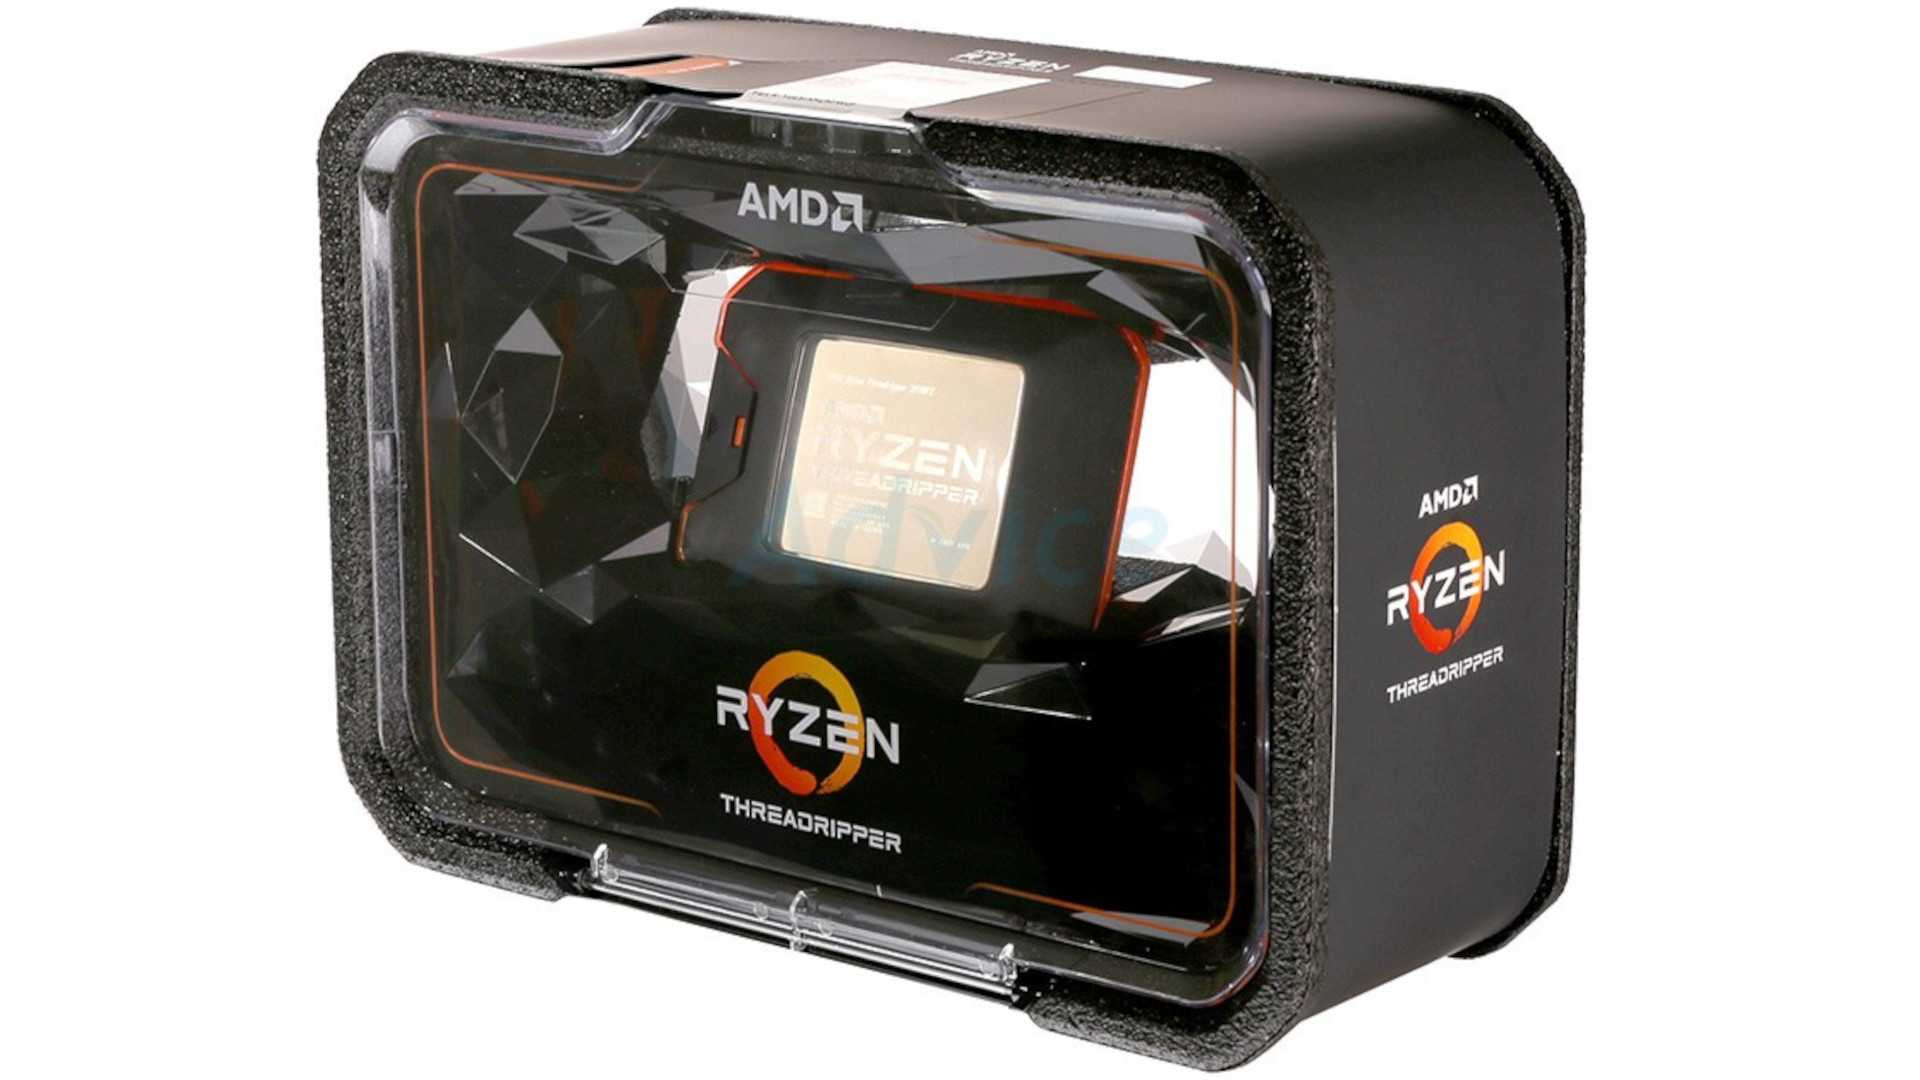 AMD Ryzen TR 2970X 3